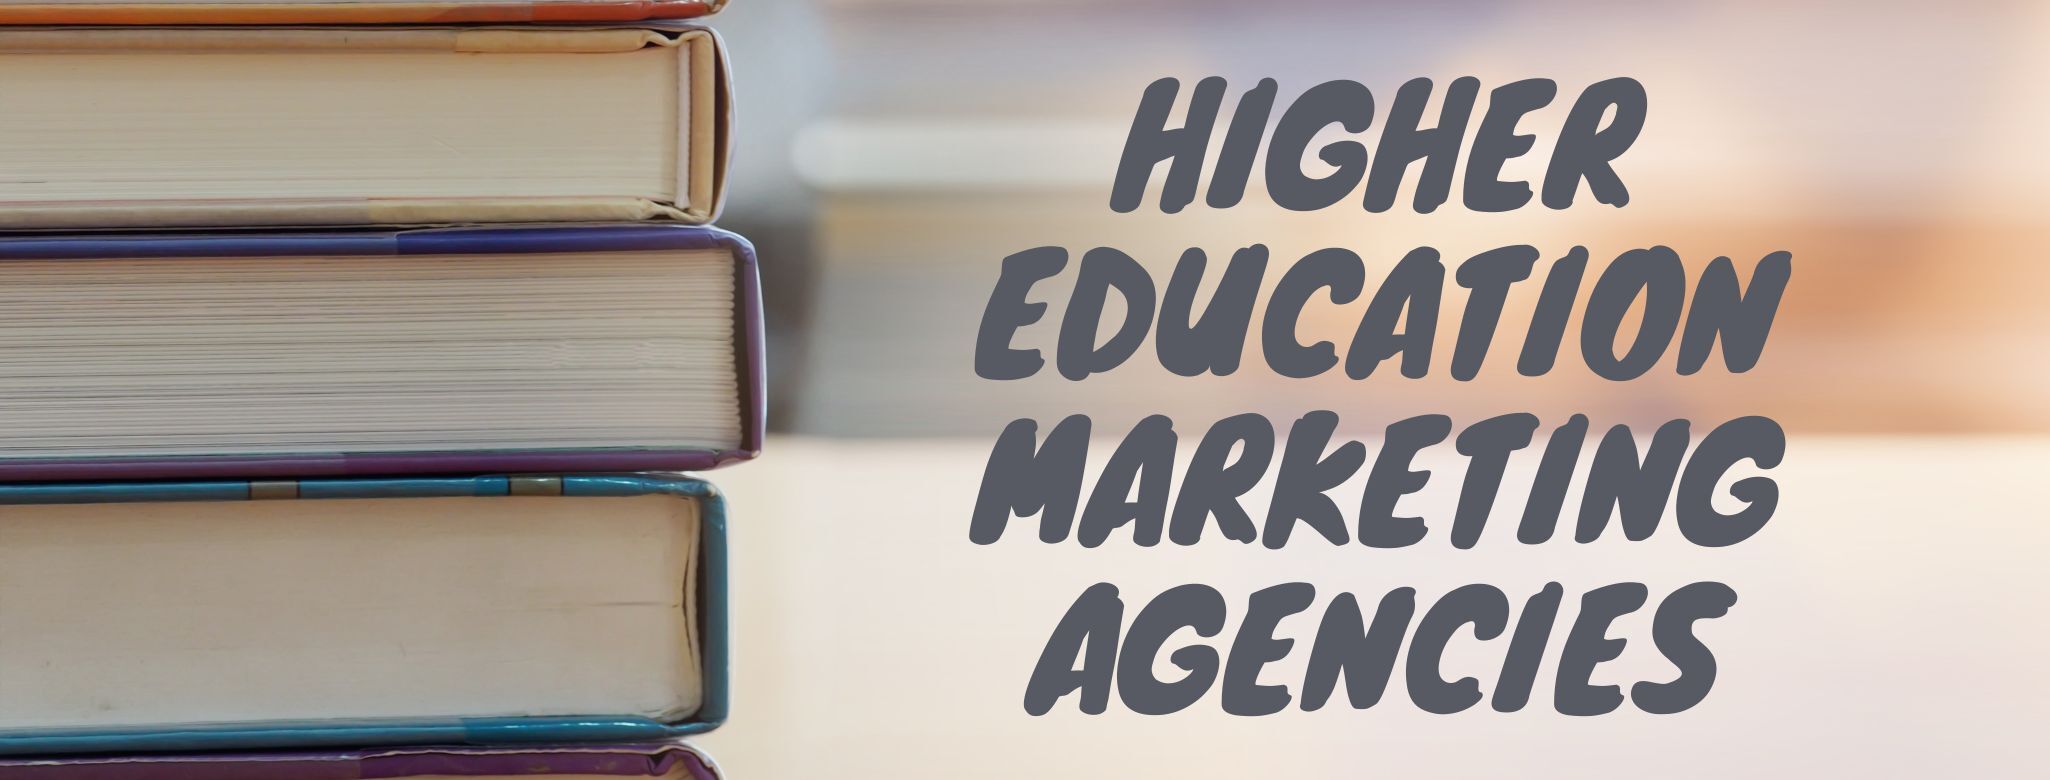 higher education marketing agencies